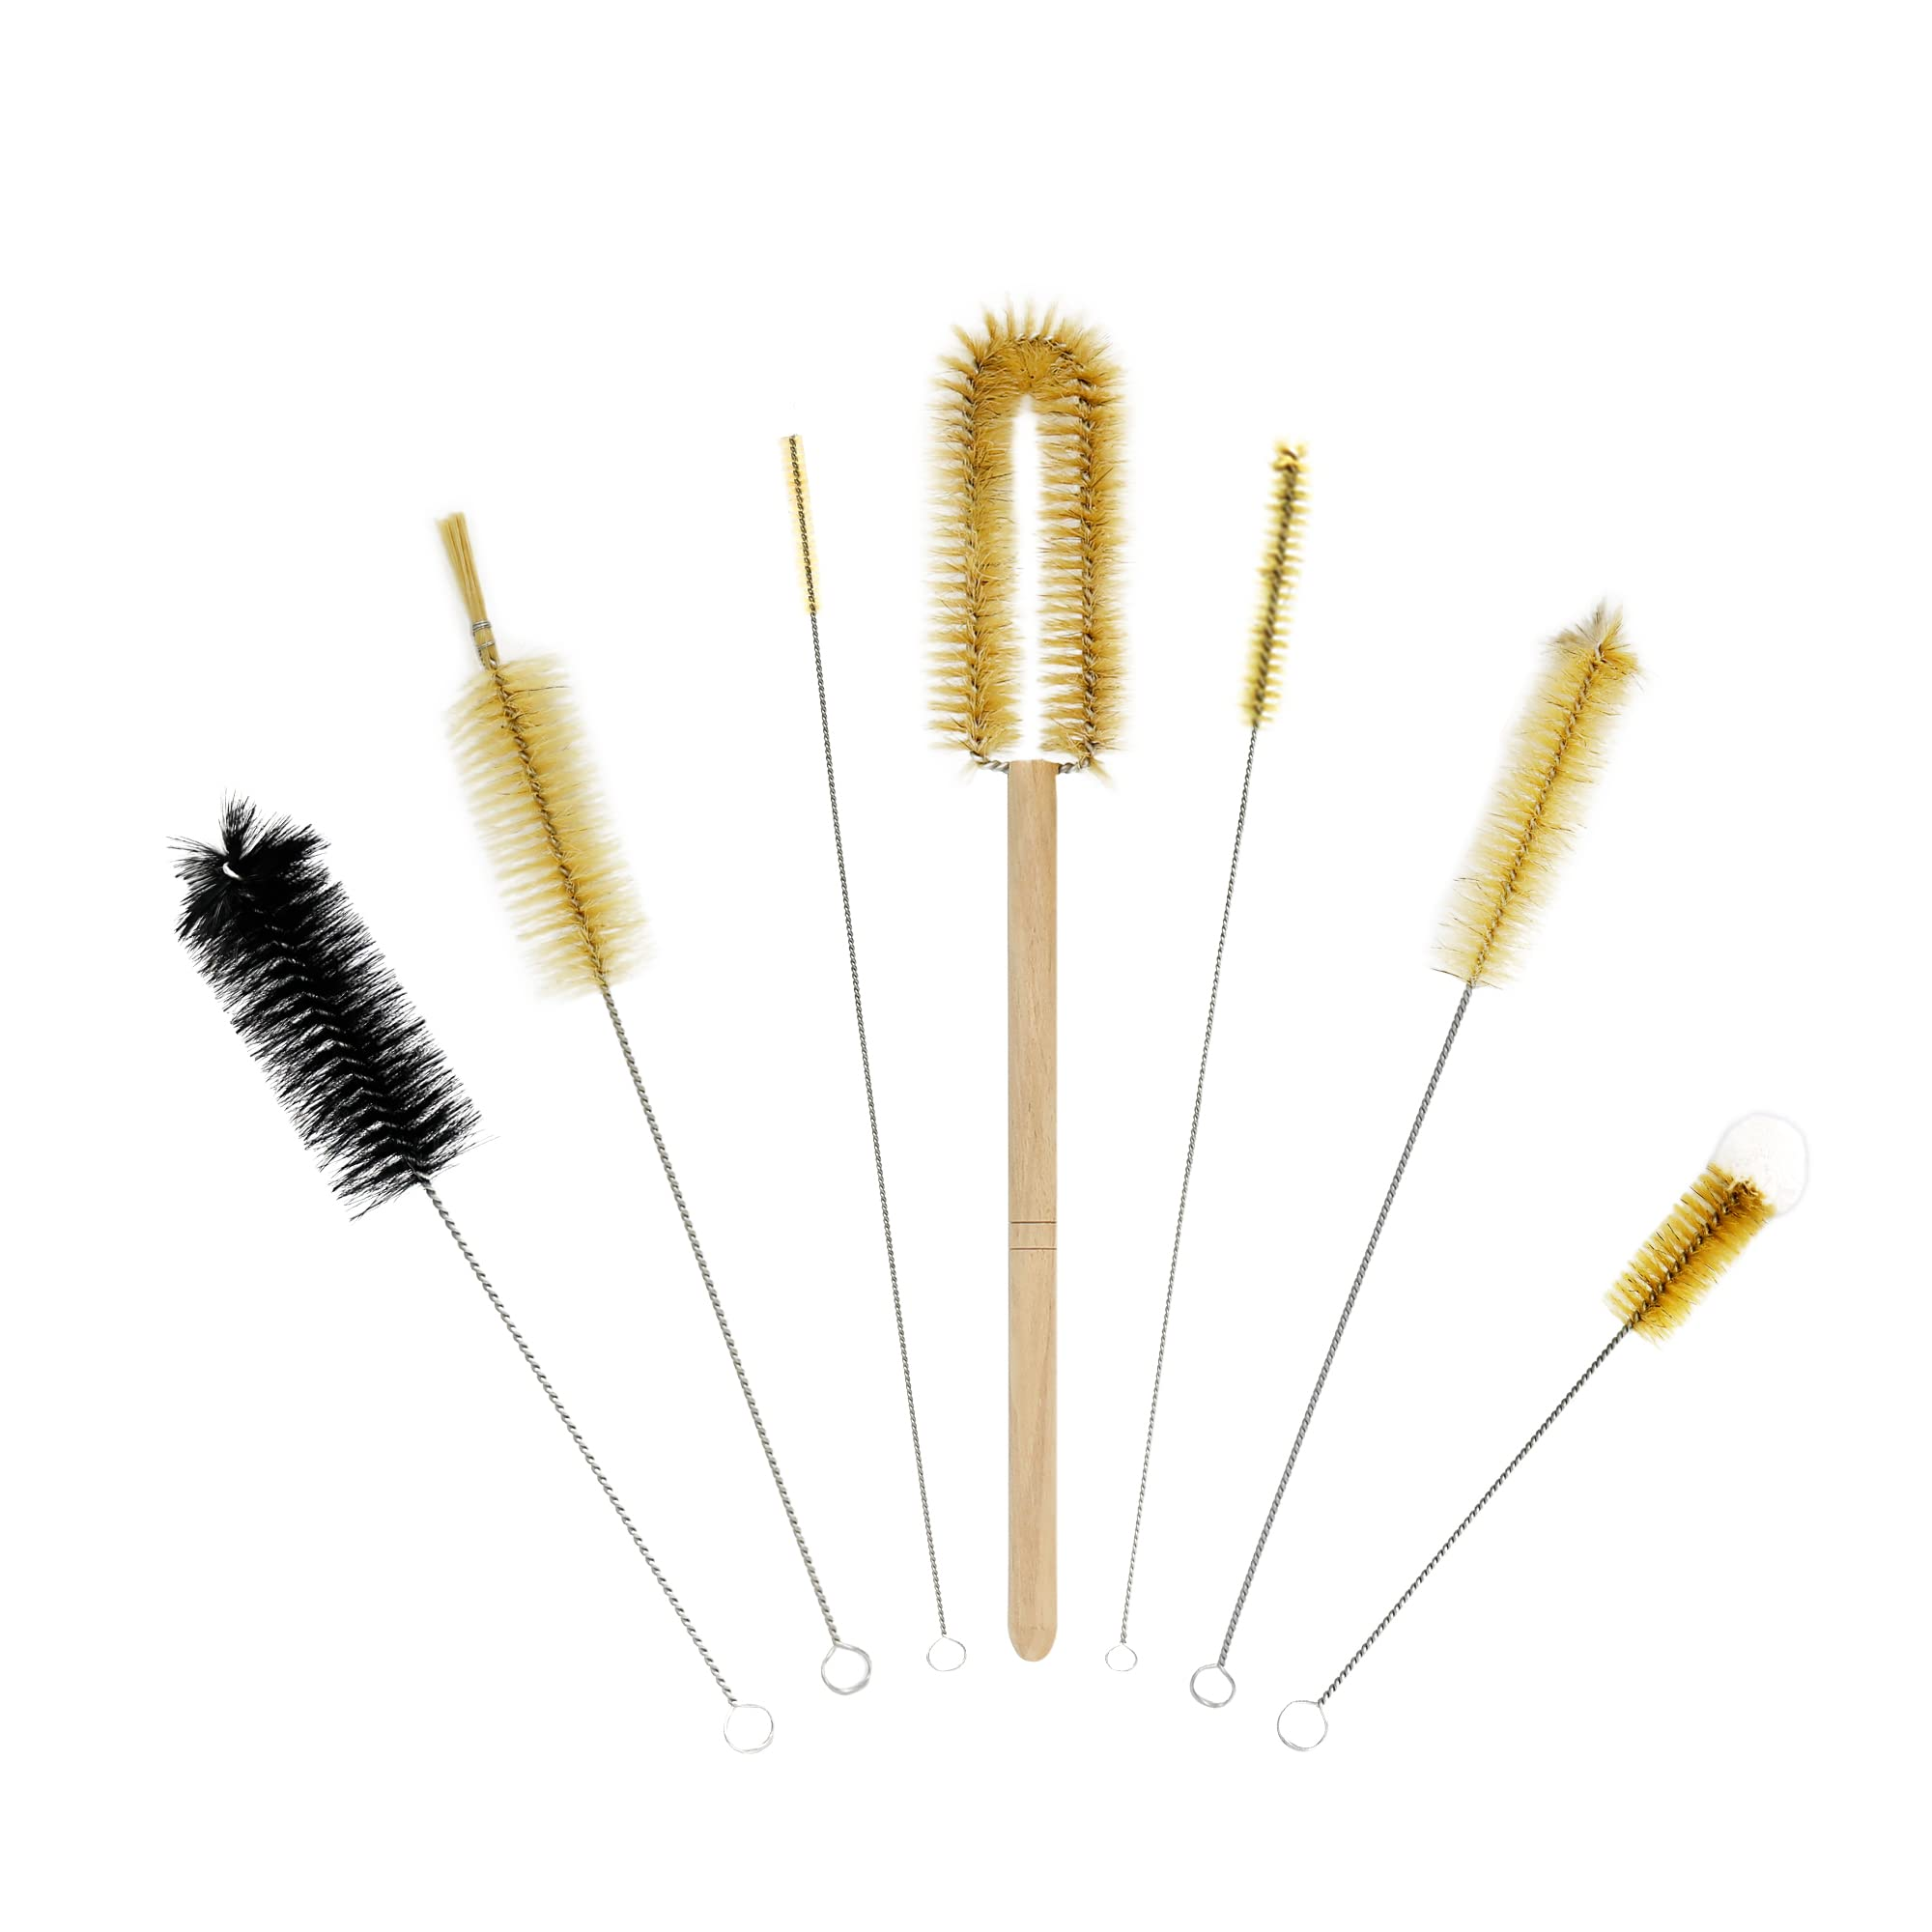 Comparison of different bristle materials for lab brushes